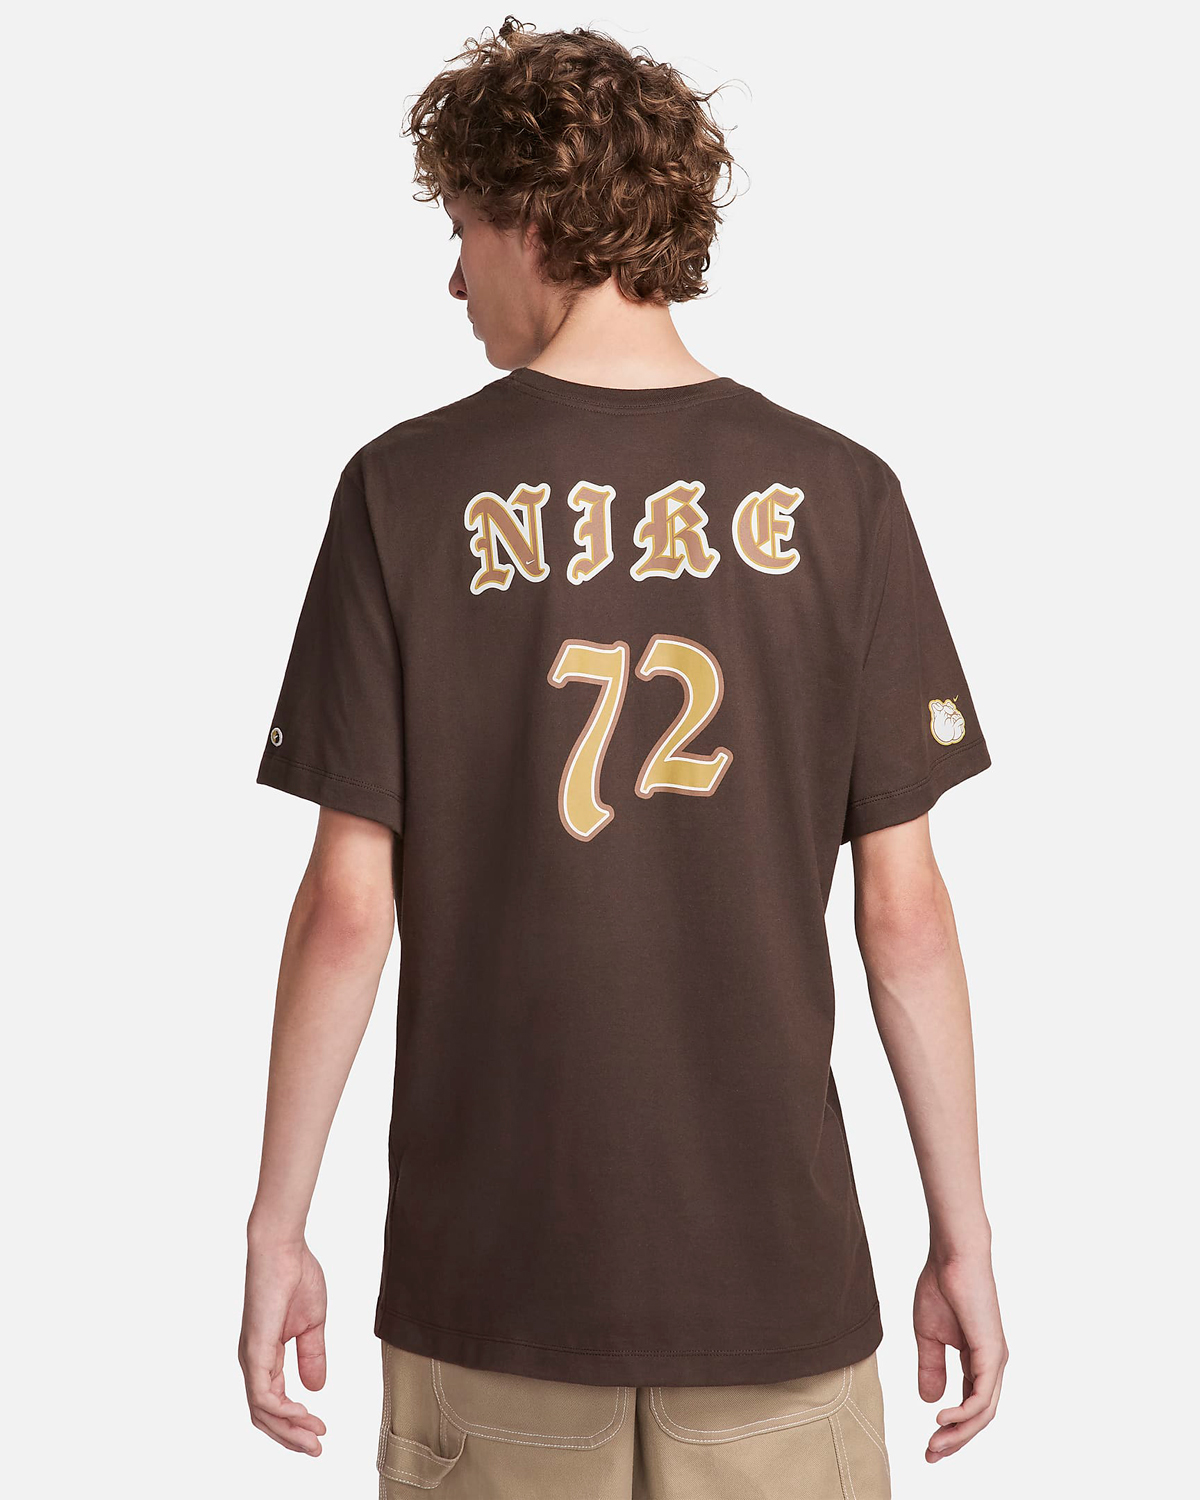 Nike Sportswear T Shirt Baroque Brown Archaeo Brown 2